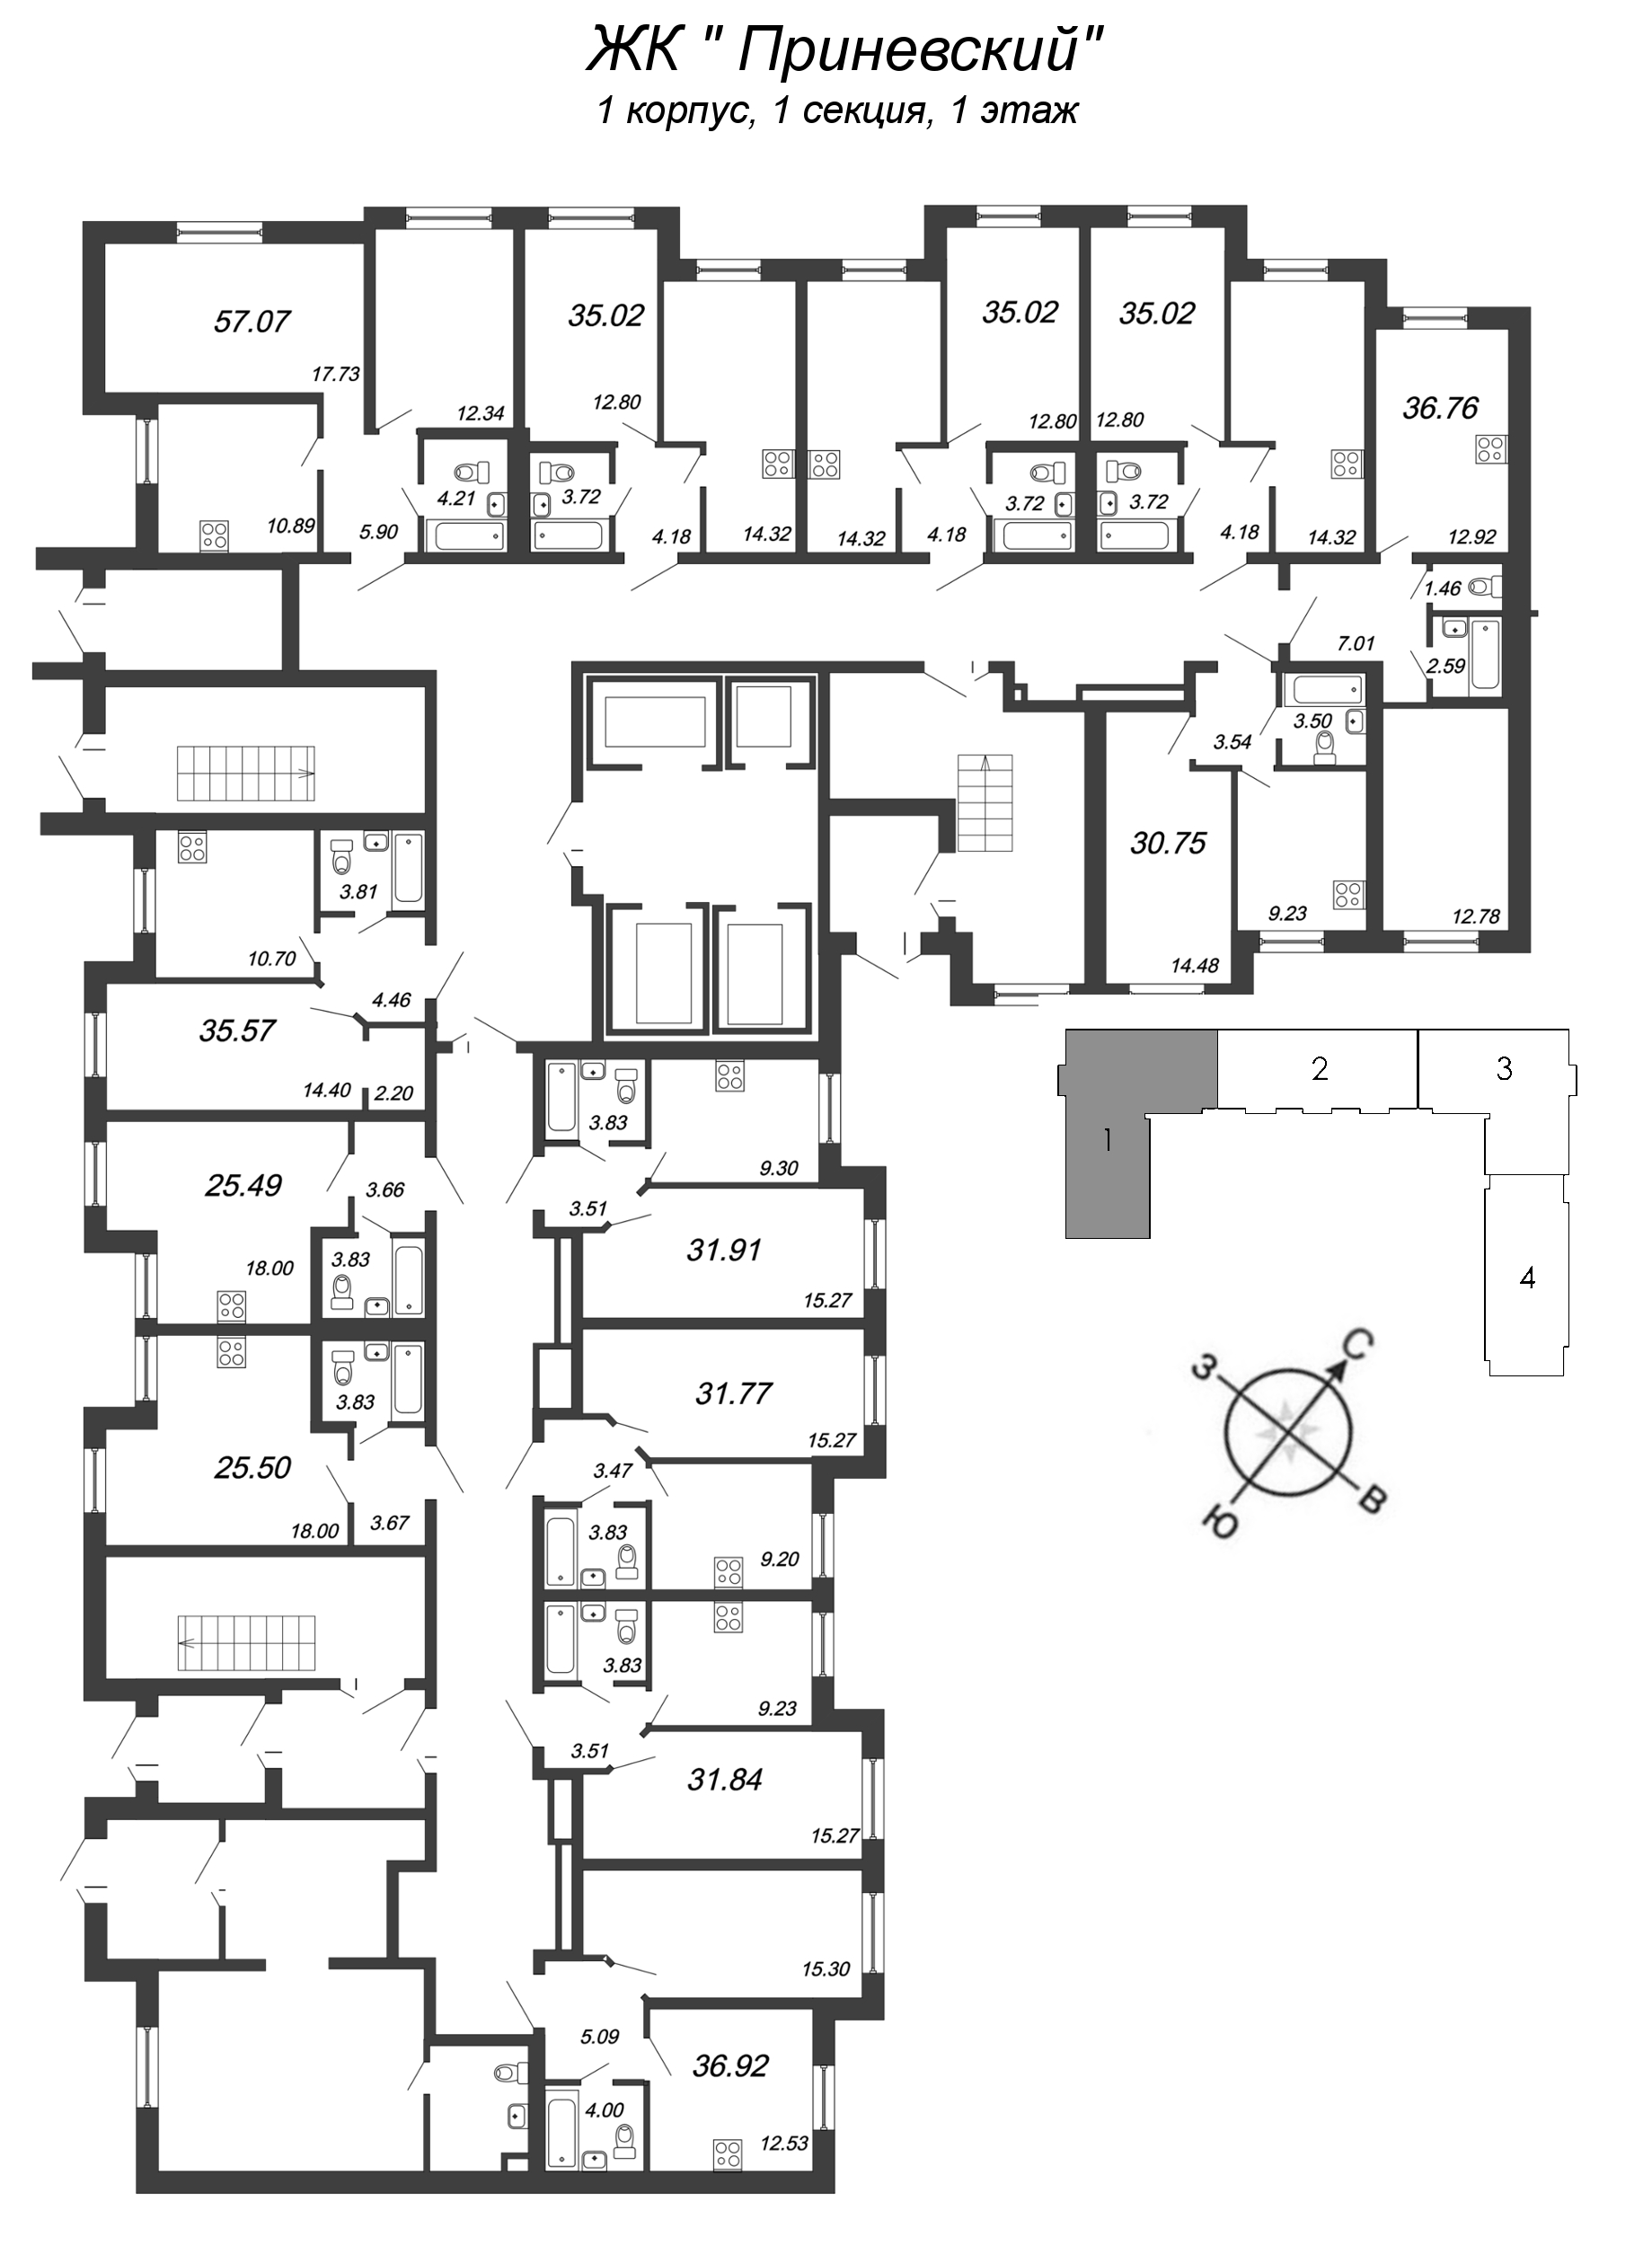 2-комнатная (Евро) квартира, 35.02 м² - планировка этажа